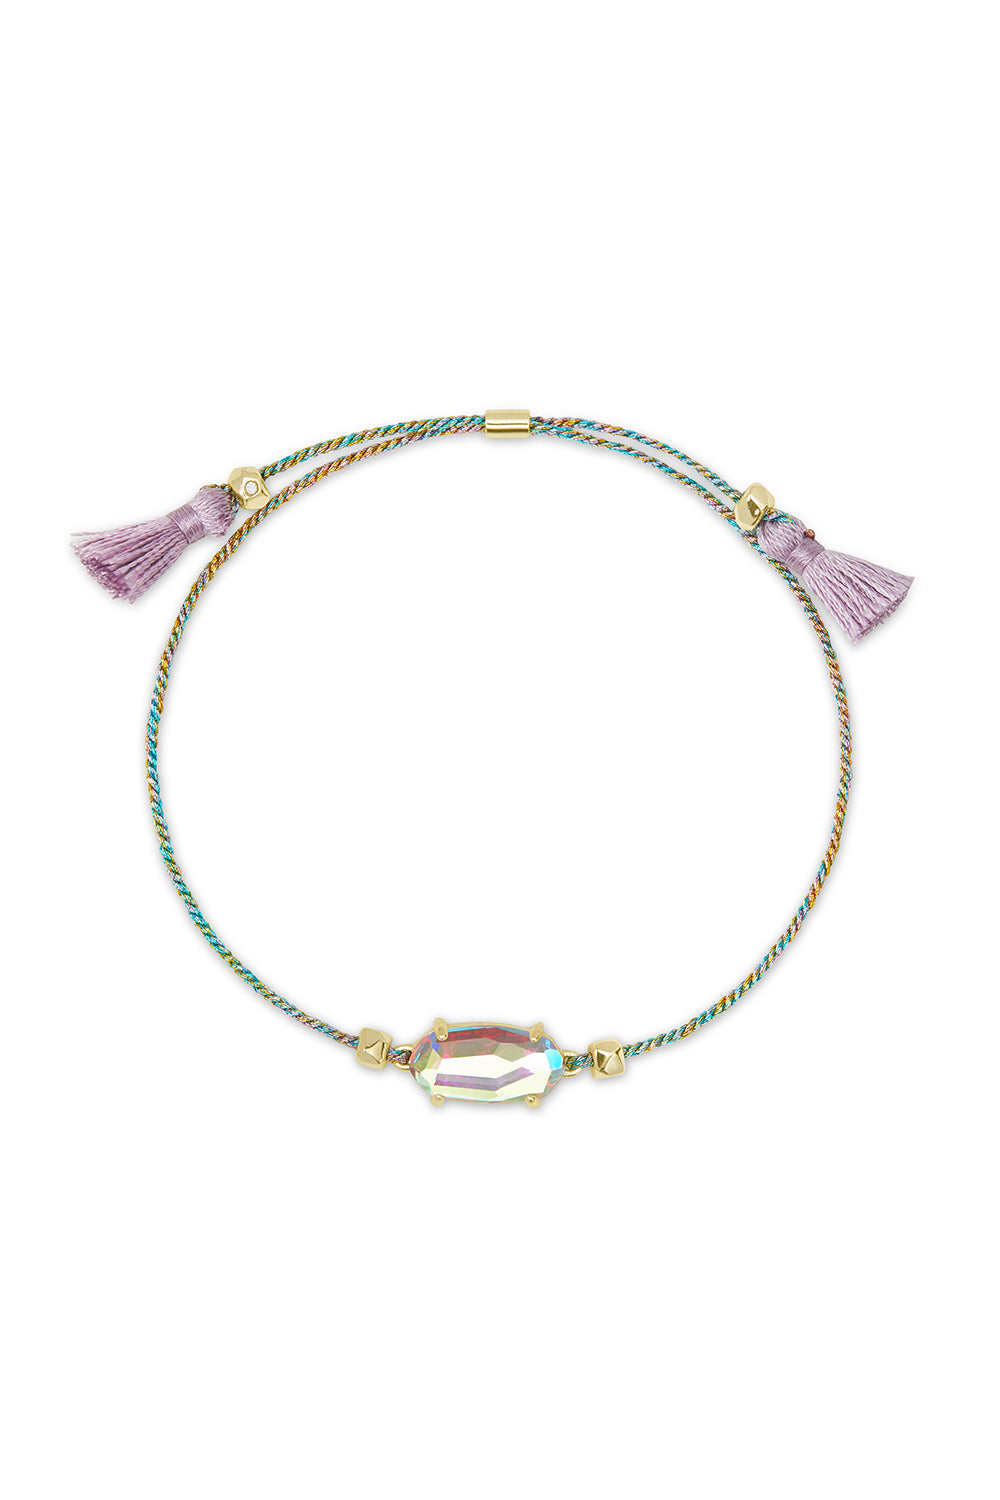 Kendra Scott: Everlyne Multicolor Cord Friendship Bracelet - Dichroic Glass | Makk Fashions